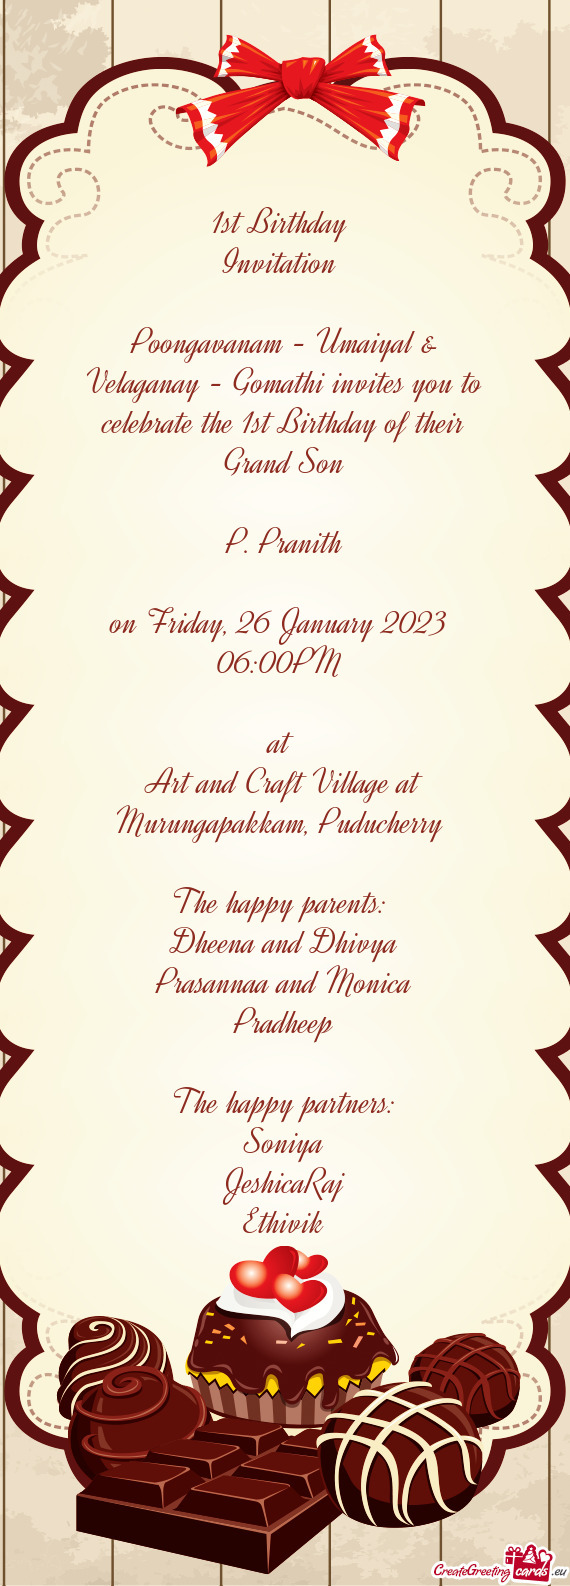 Poongavanam - Umaiyal & Velaganay - Gomathi invites you to celebrate the 1st Birthday of their Grand